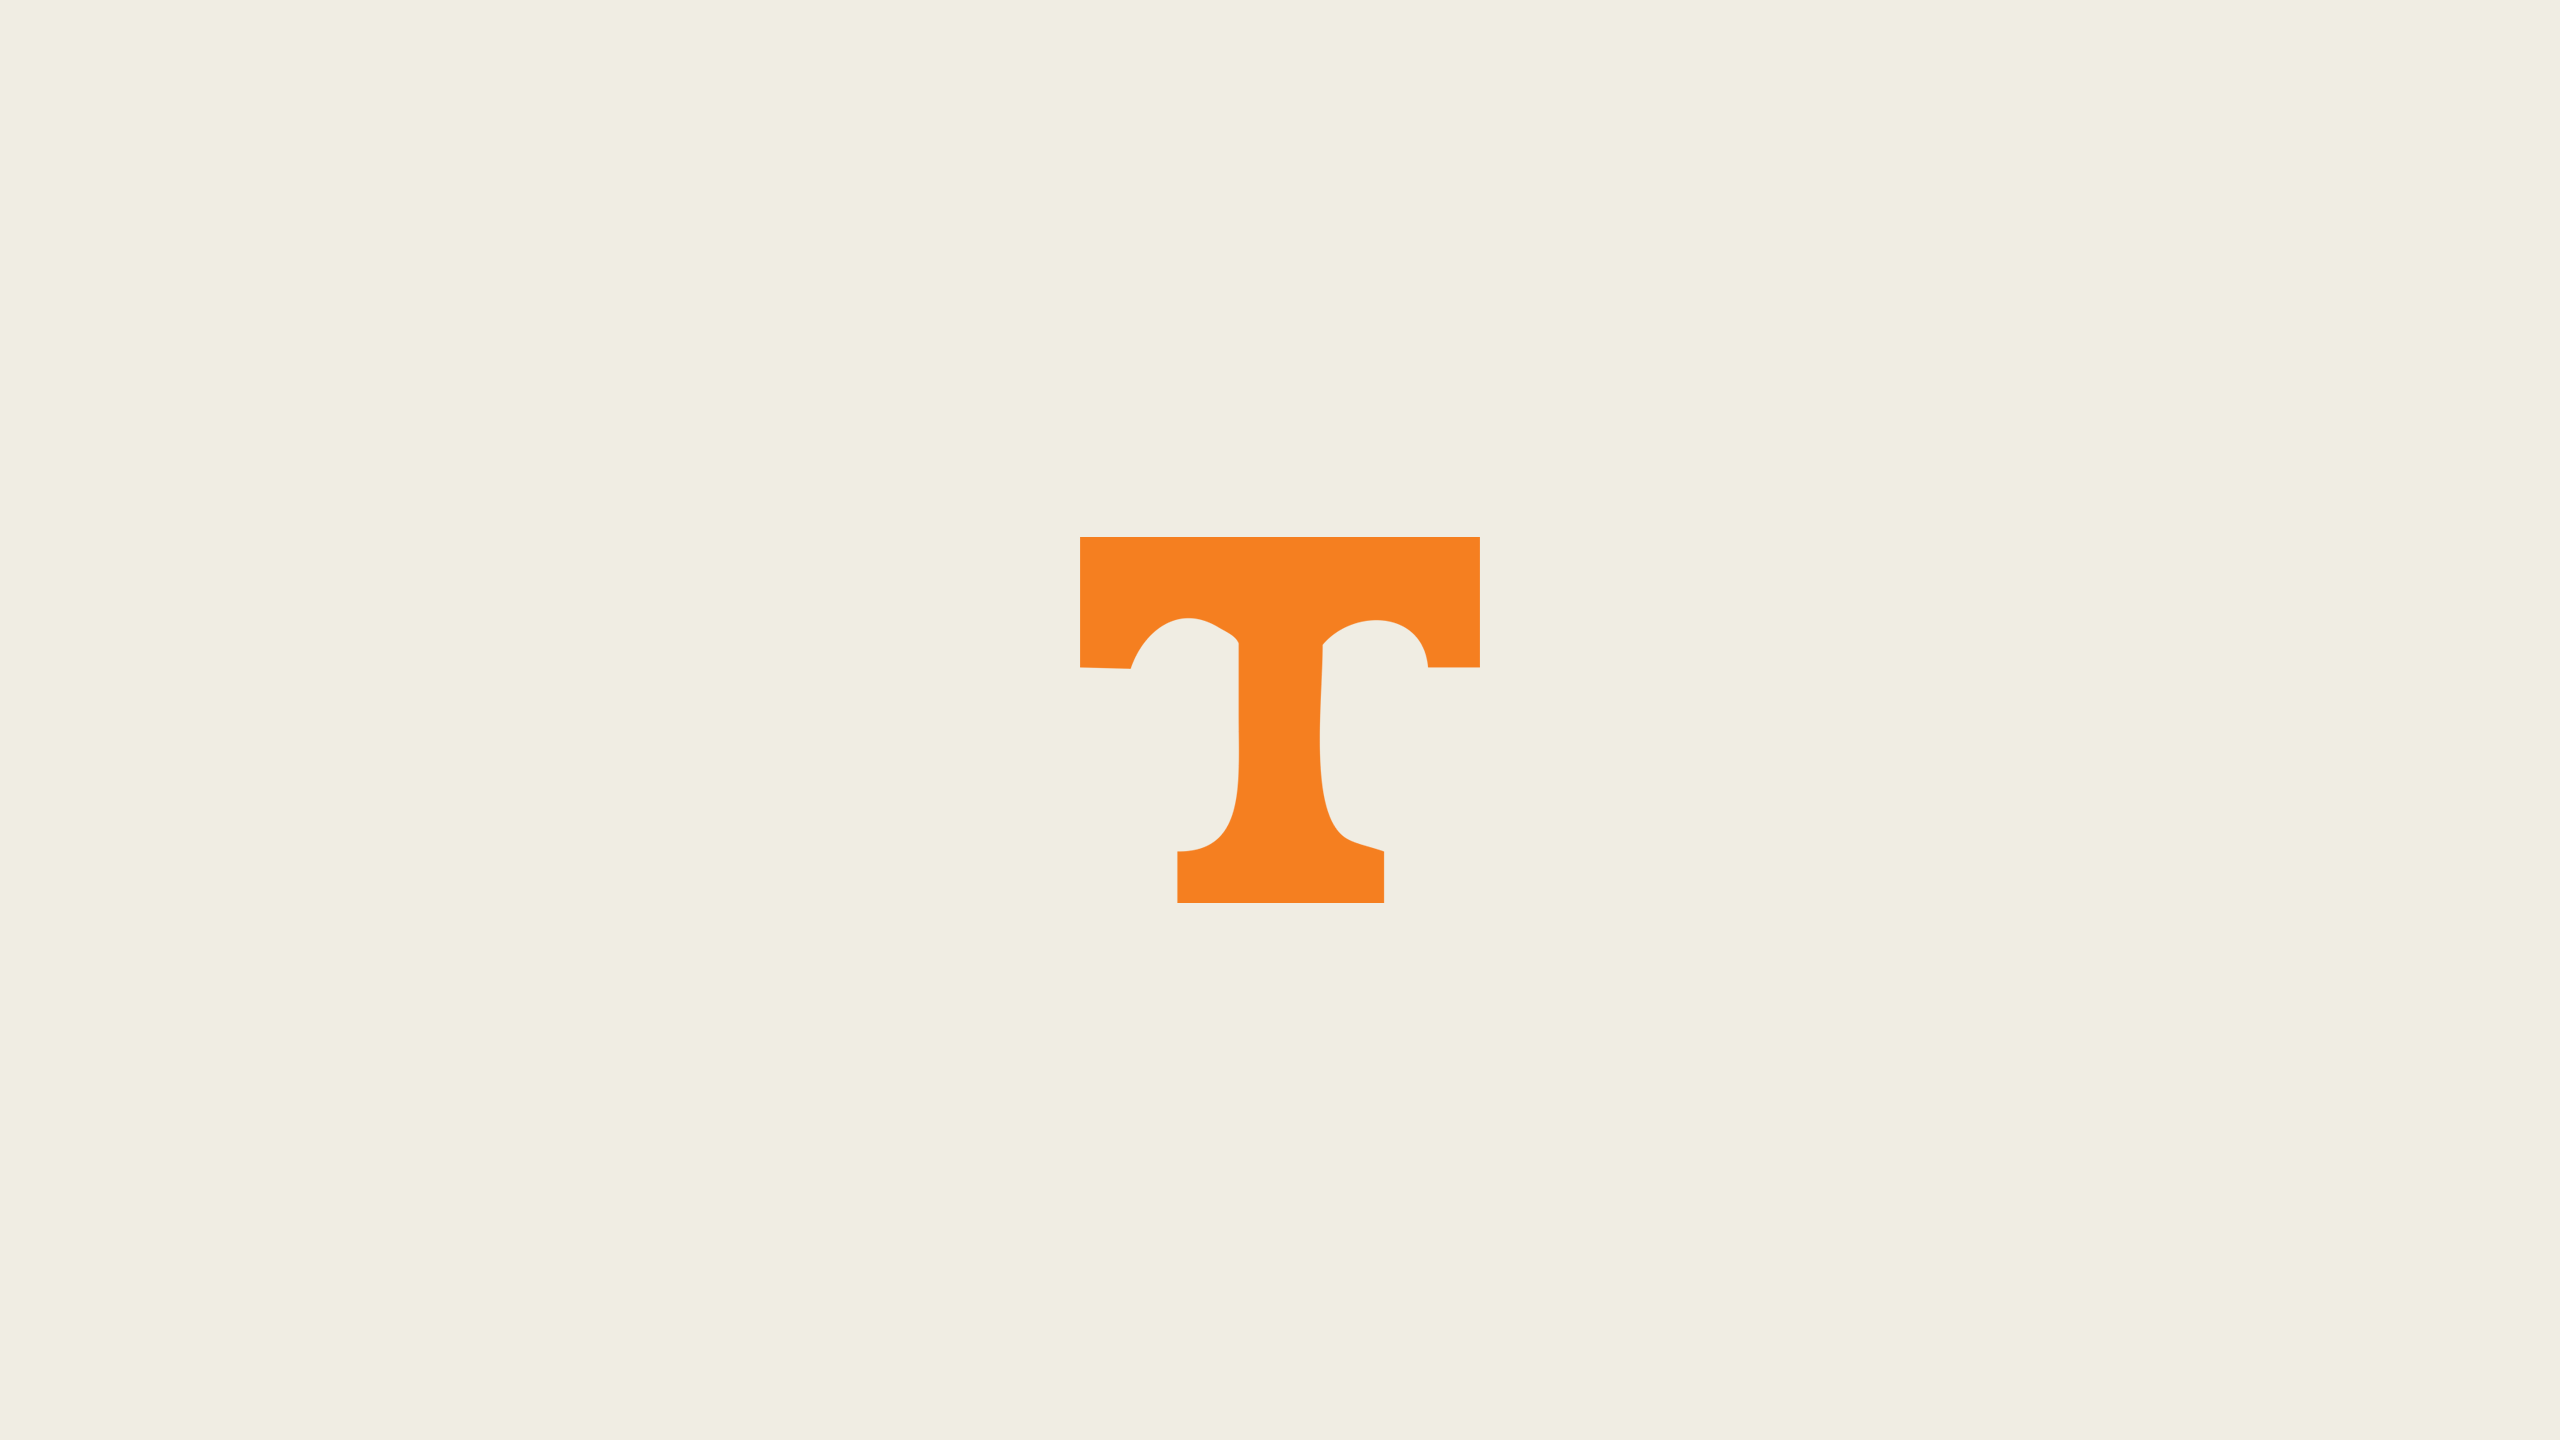 Tennessee Volunteers Basketball - NCAAb - Square Bettor